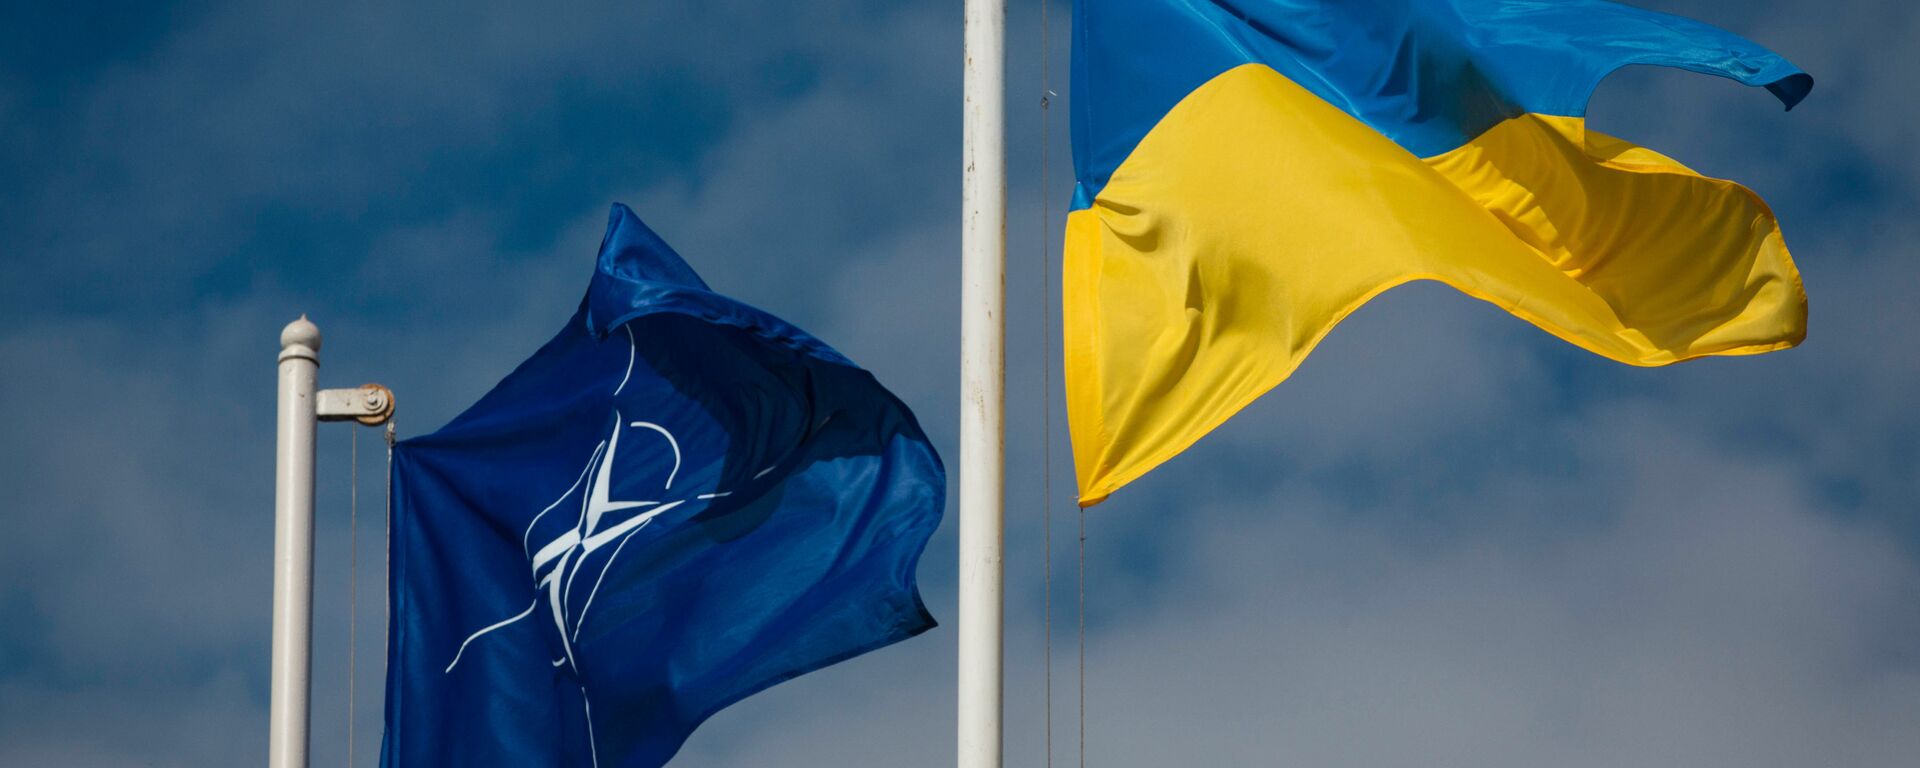 Las banderas de la OTAN y Ucrania - Sputnik Mundo, 1920, 09.04.2021